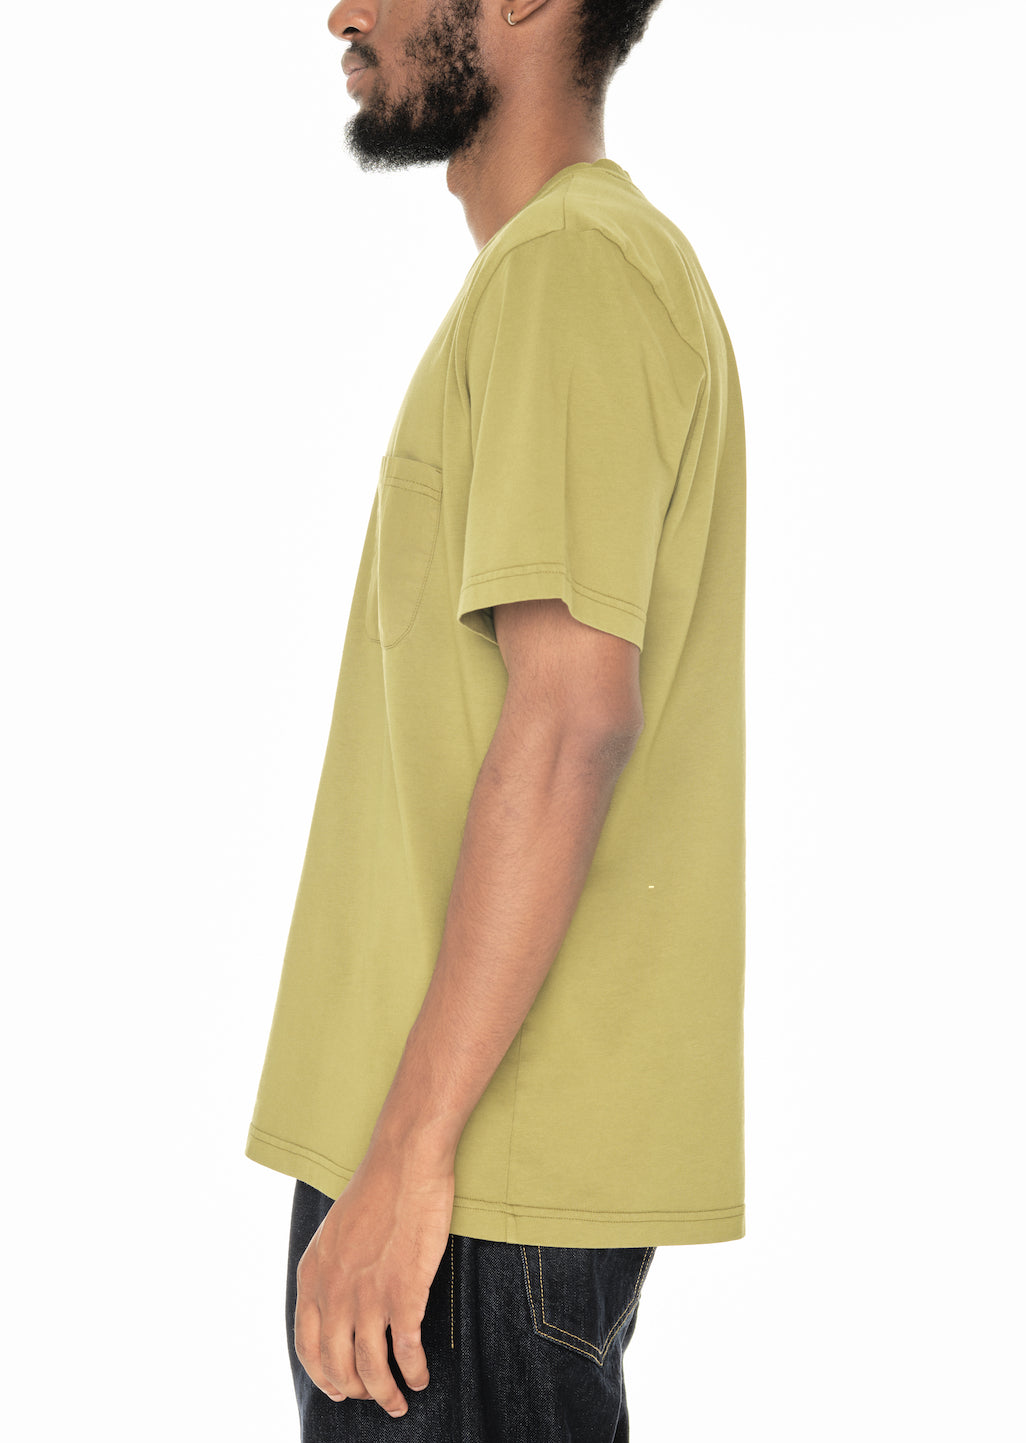 Woven Pocket T-Shirt in Khaki